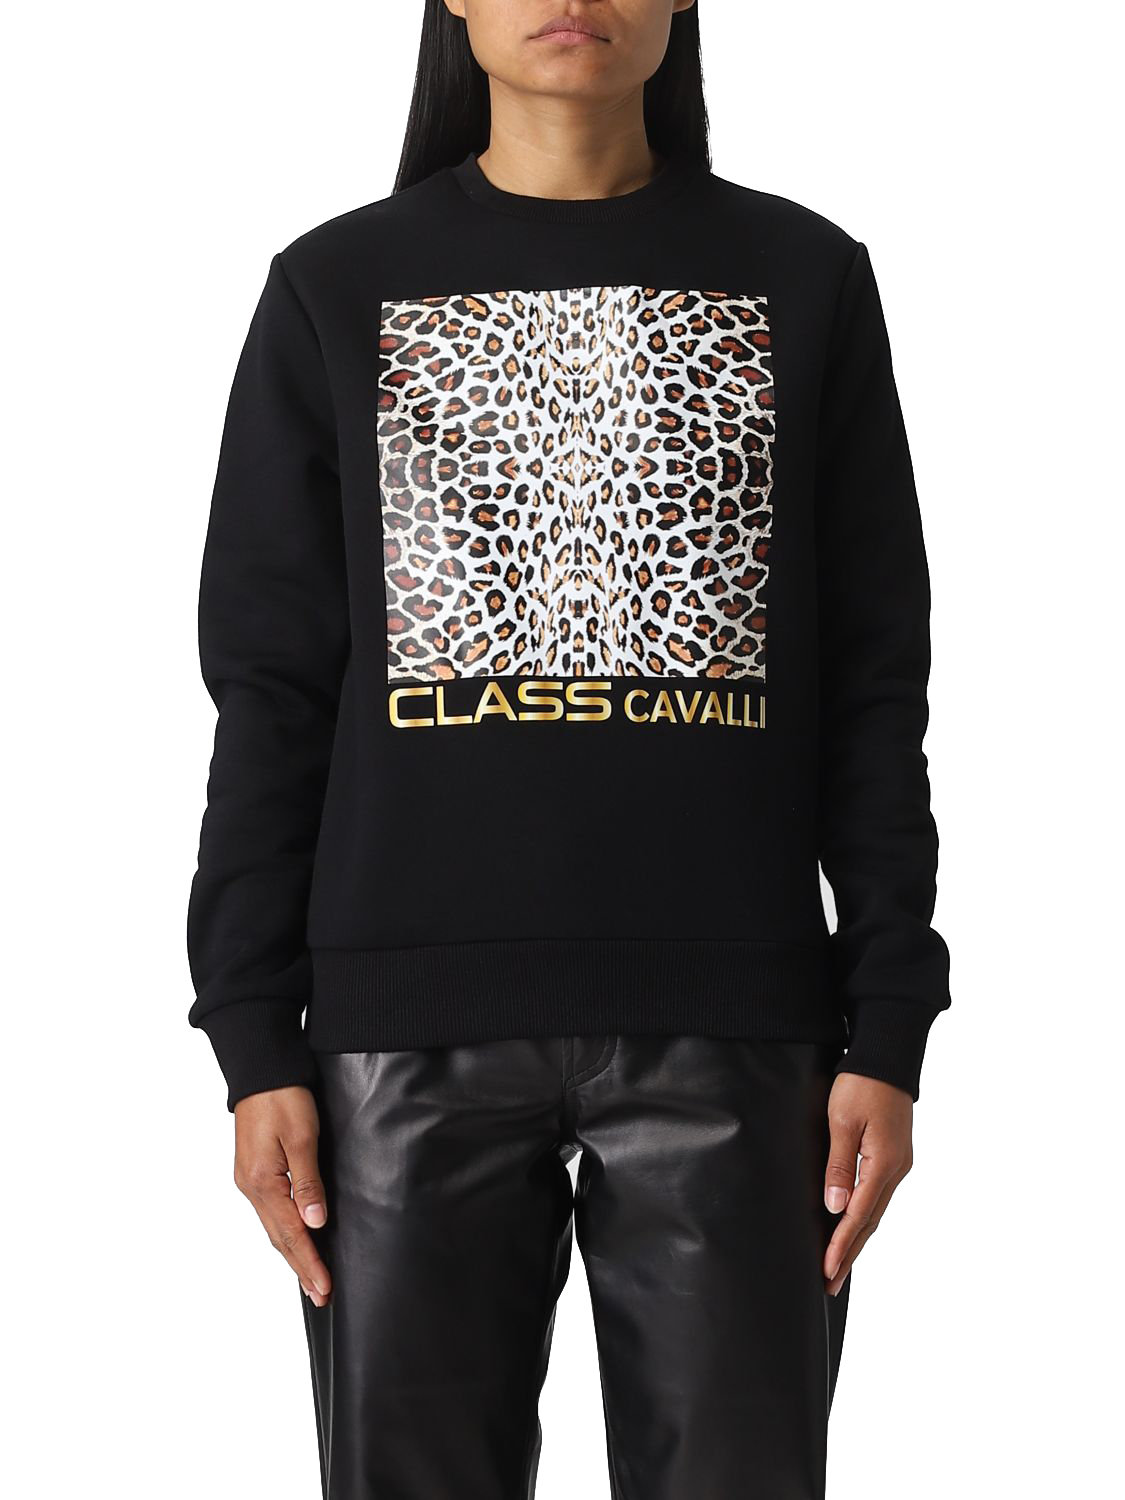 Cavalli Class Sweatshirt PXT65H CF010 05051 wholesale